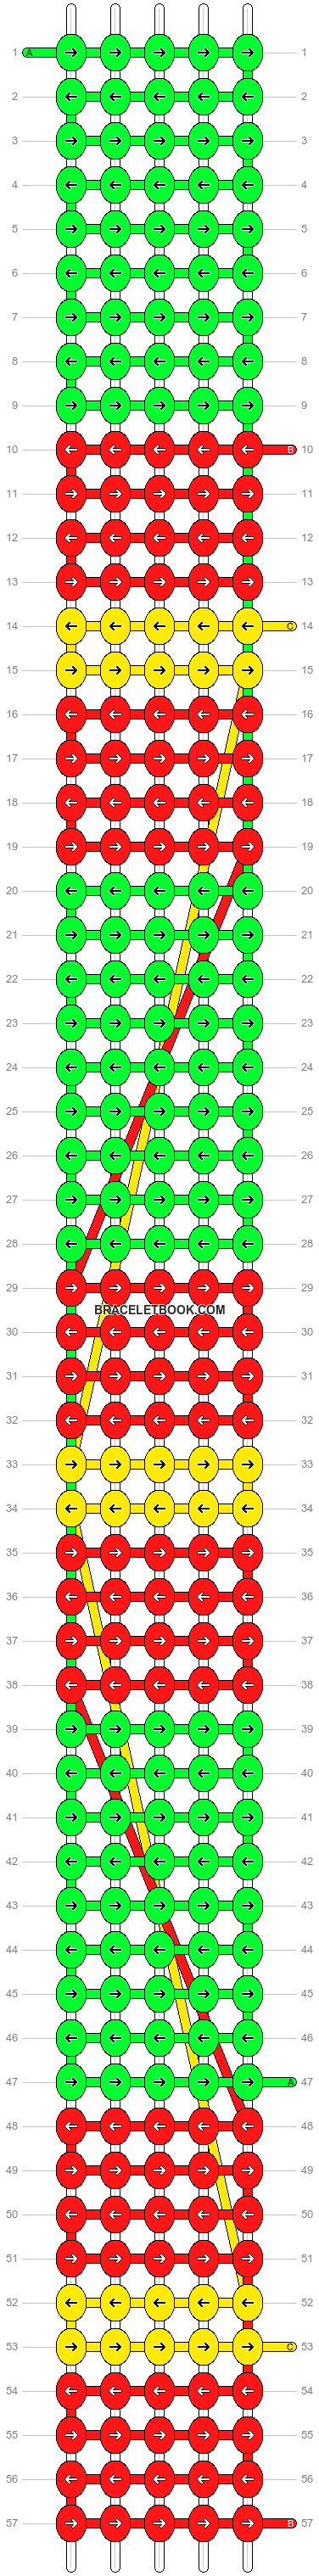 Alpha pattern #20786 variation #202916 pattern